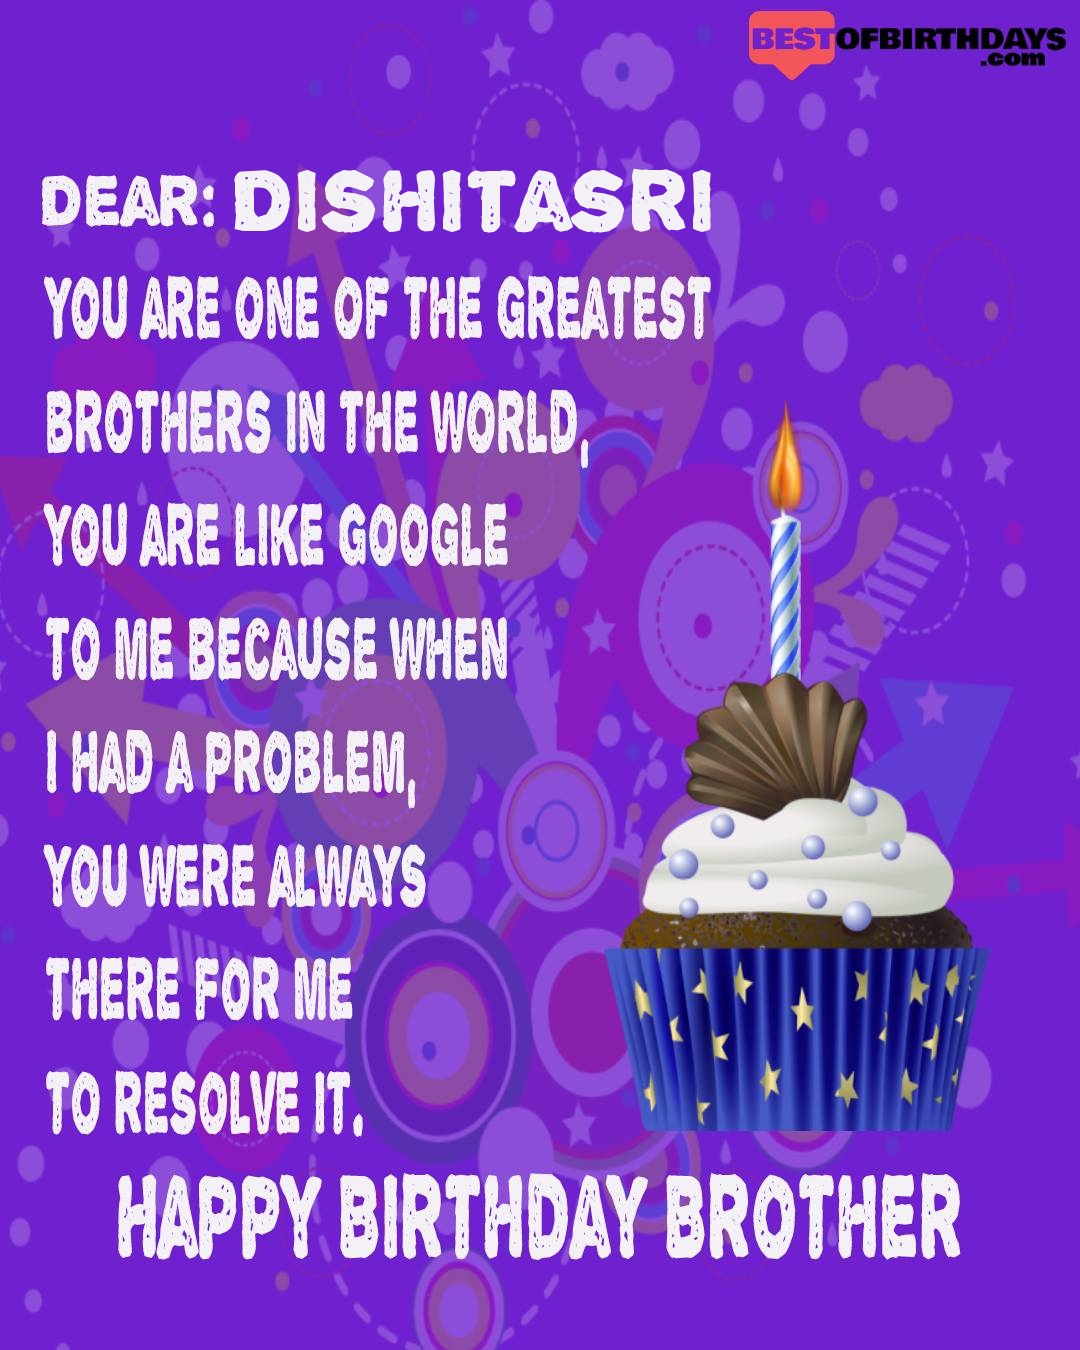 Happy birthday dishitasri bhai brother bro